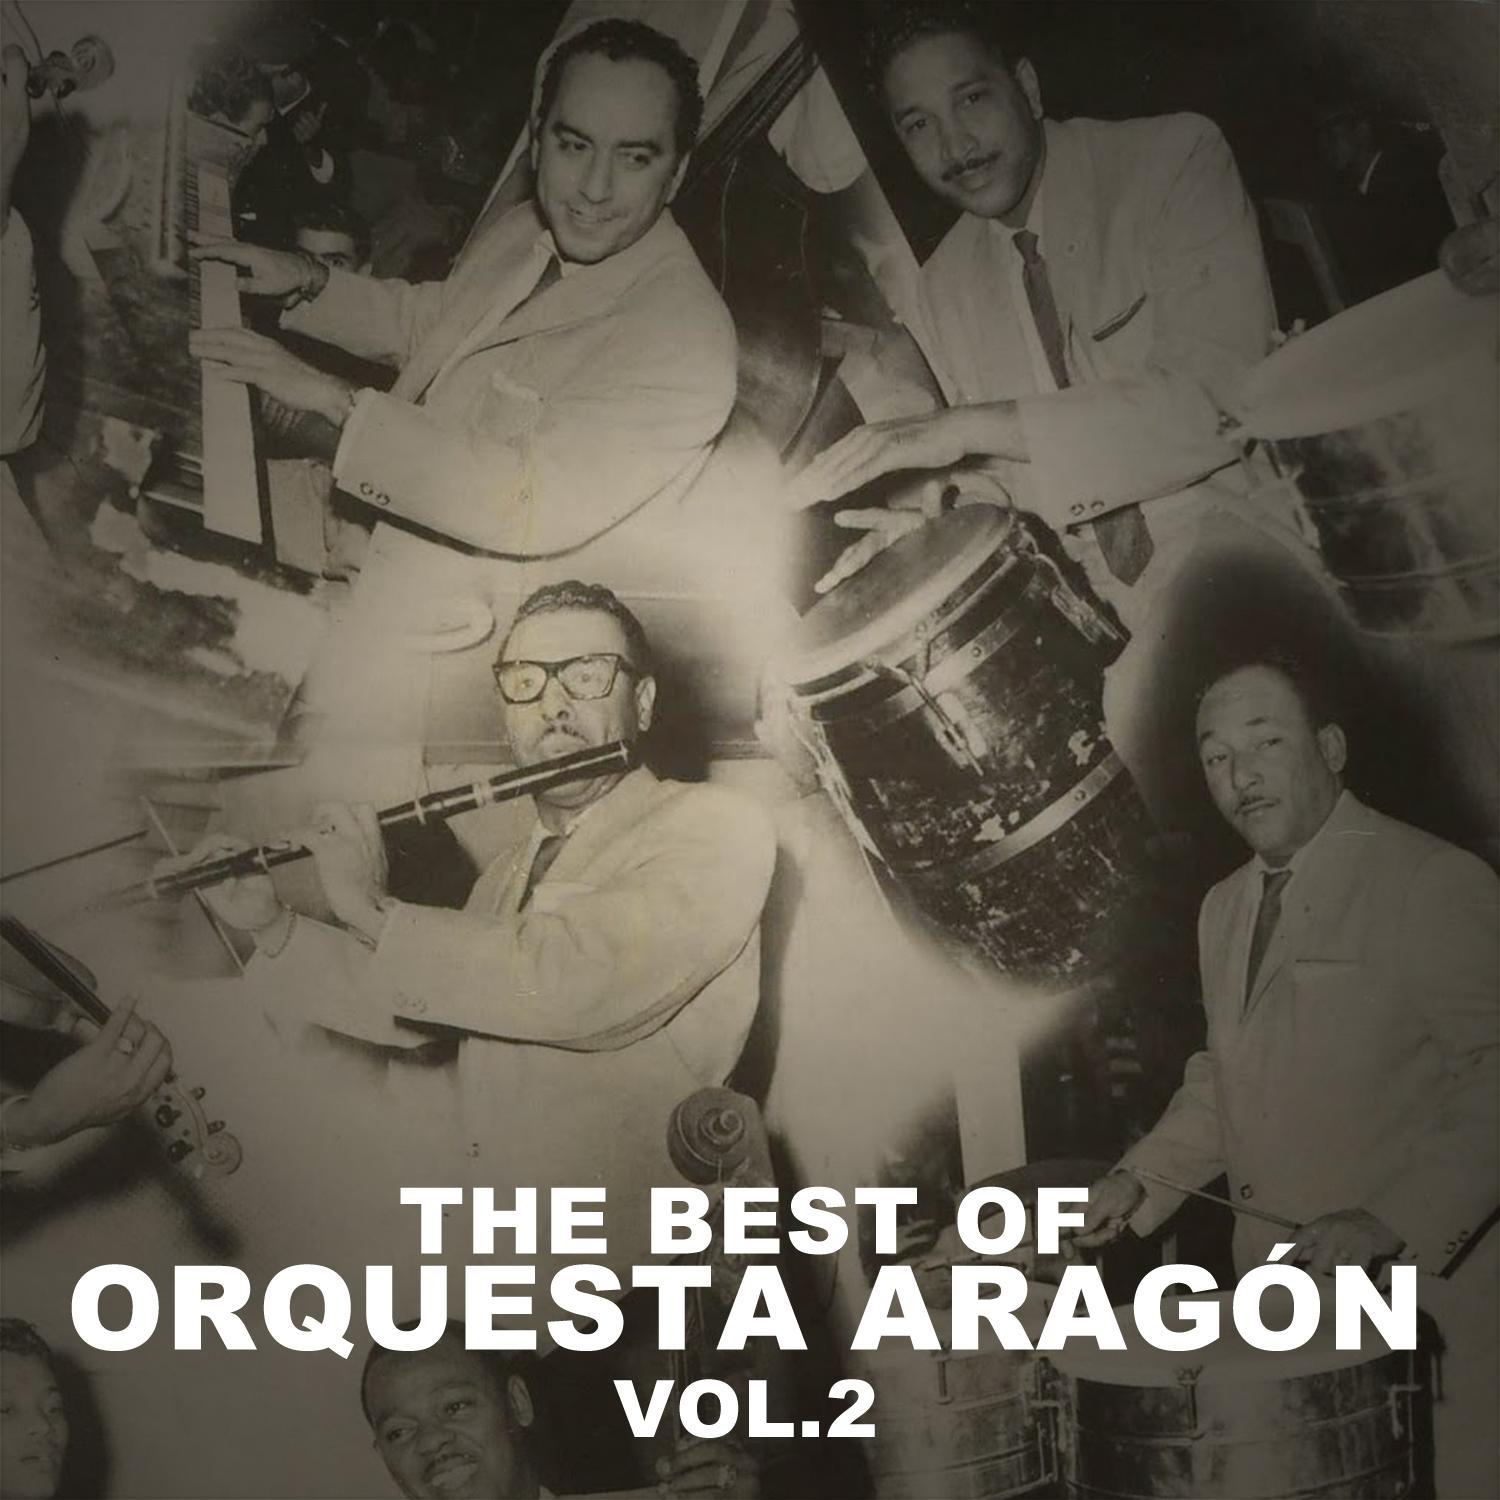 The Best Of Orquesta Arago n, Vol. 2